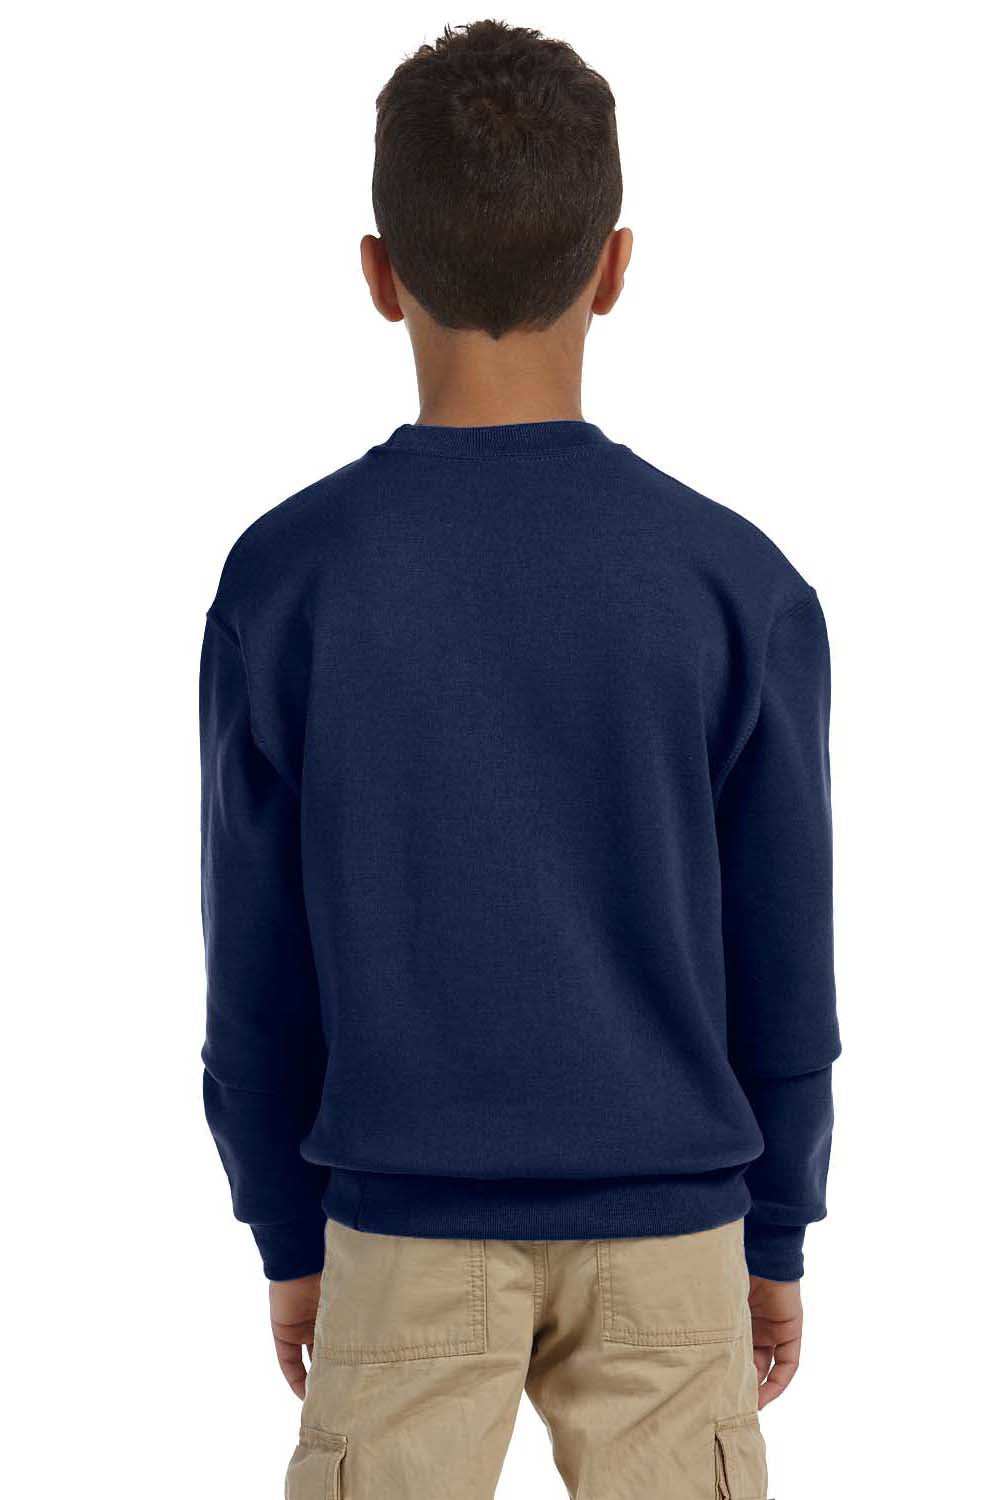 Jerzees 562B Youth NuBlend Fleece Crewneck Sweatshirt Navy Blue Back